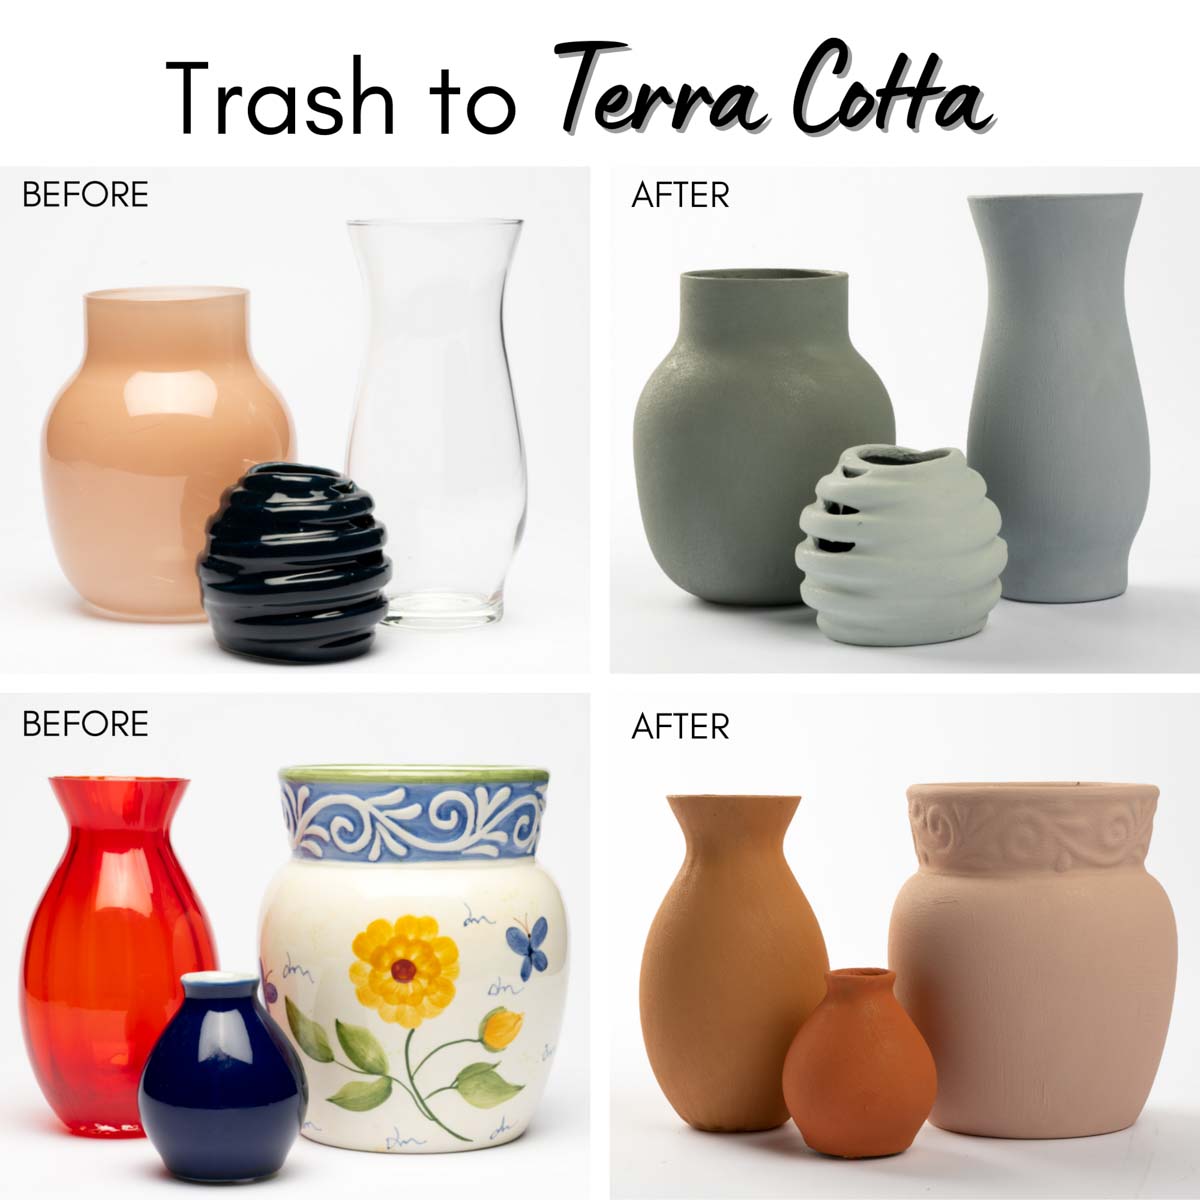 FolkArt ® Terra Cotta™ Acrylic Paint - Fresh Granite, 2 oz. - 7029